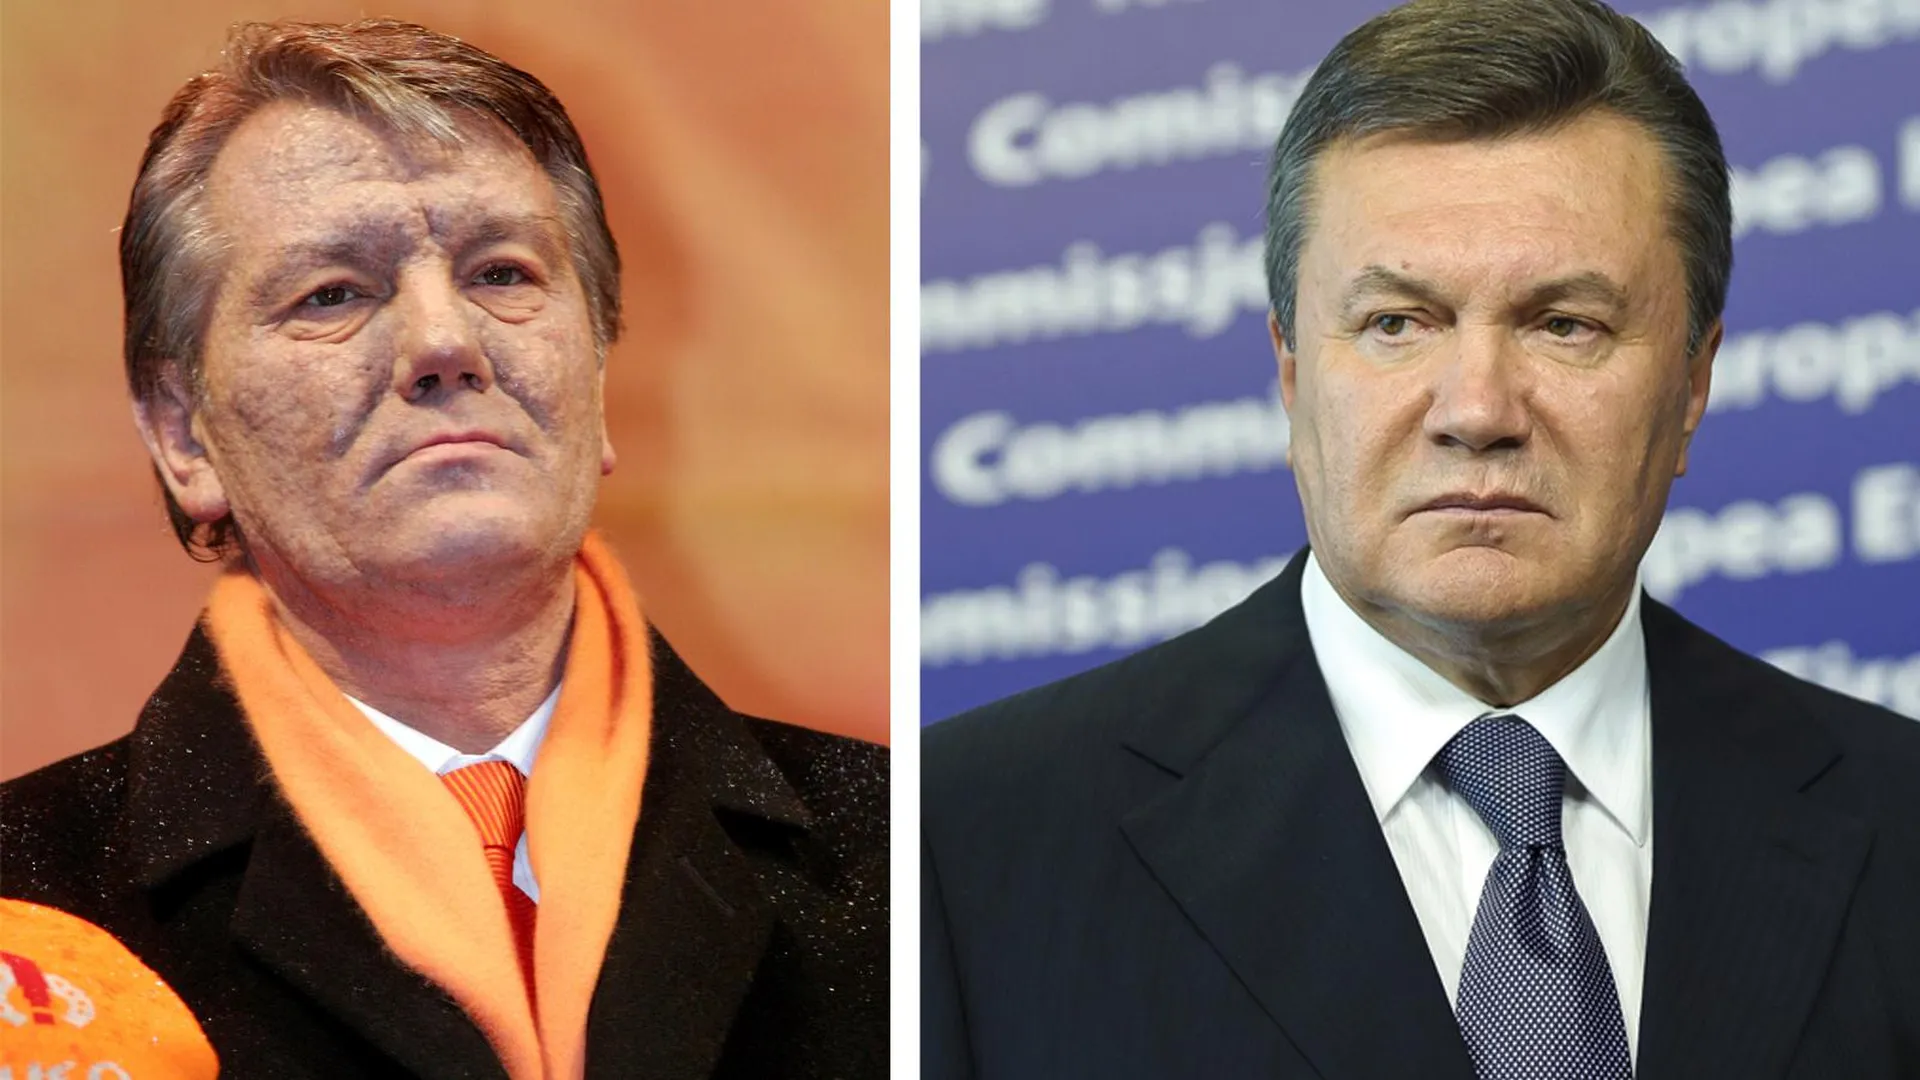 Третий президент Украины Виктор Ющенко, фото: Robert King; четвертый президент Украины Виктор Янукович. Фото: w80